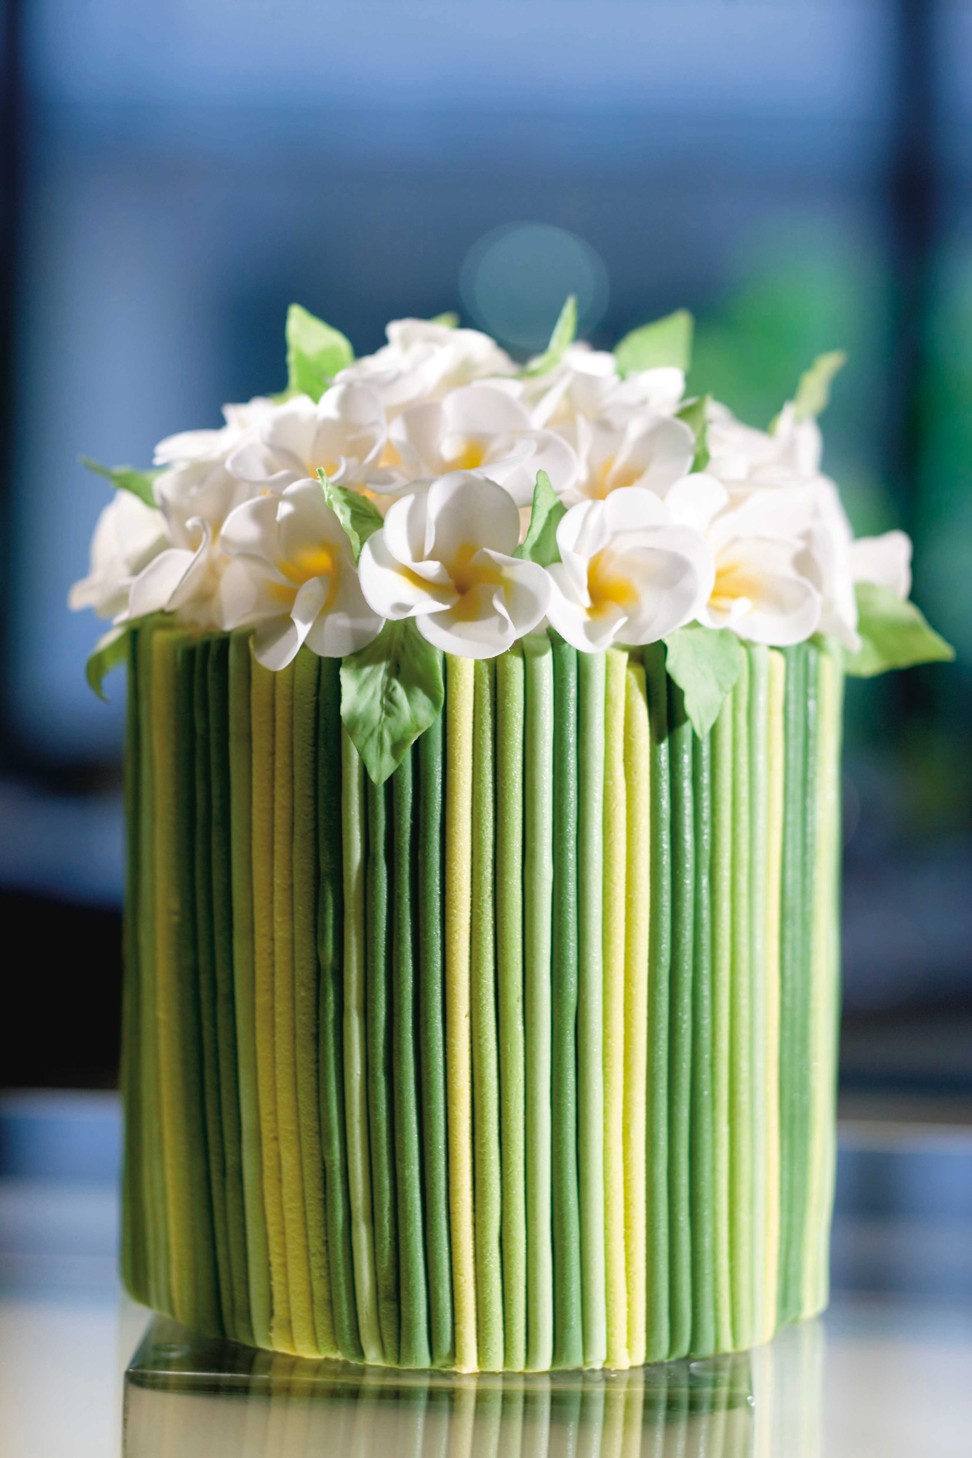 Mandarin Oriental, Hong Kongok recommends simple cakes with elegant details for modern weddings